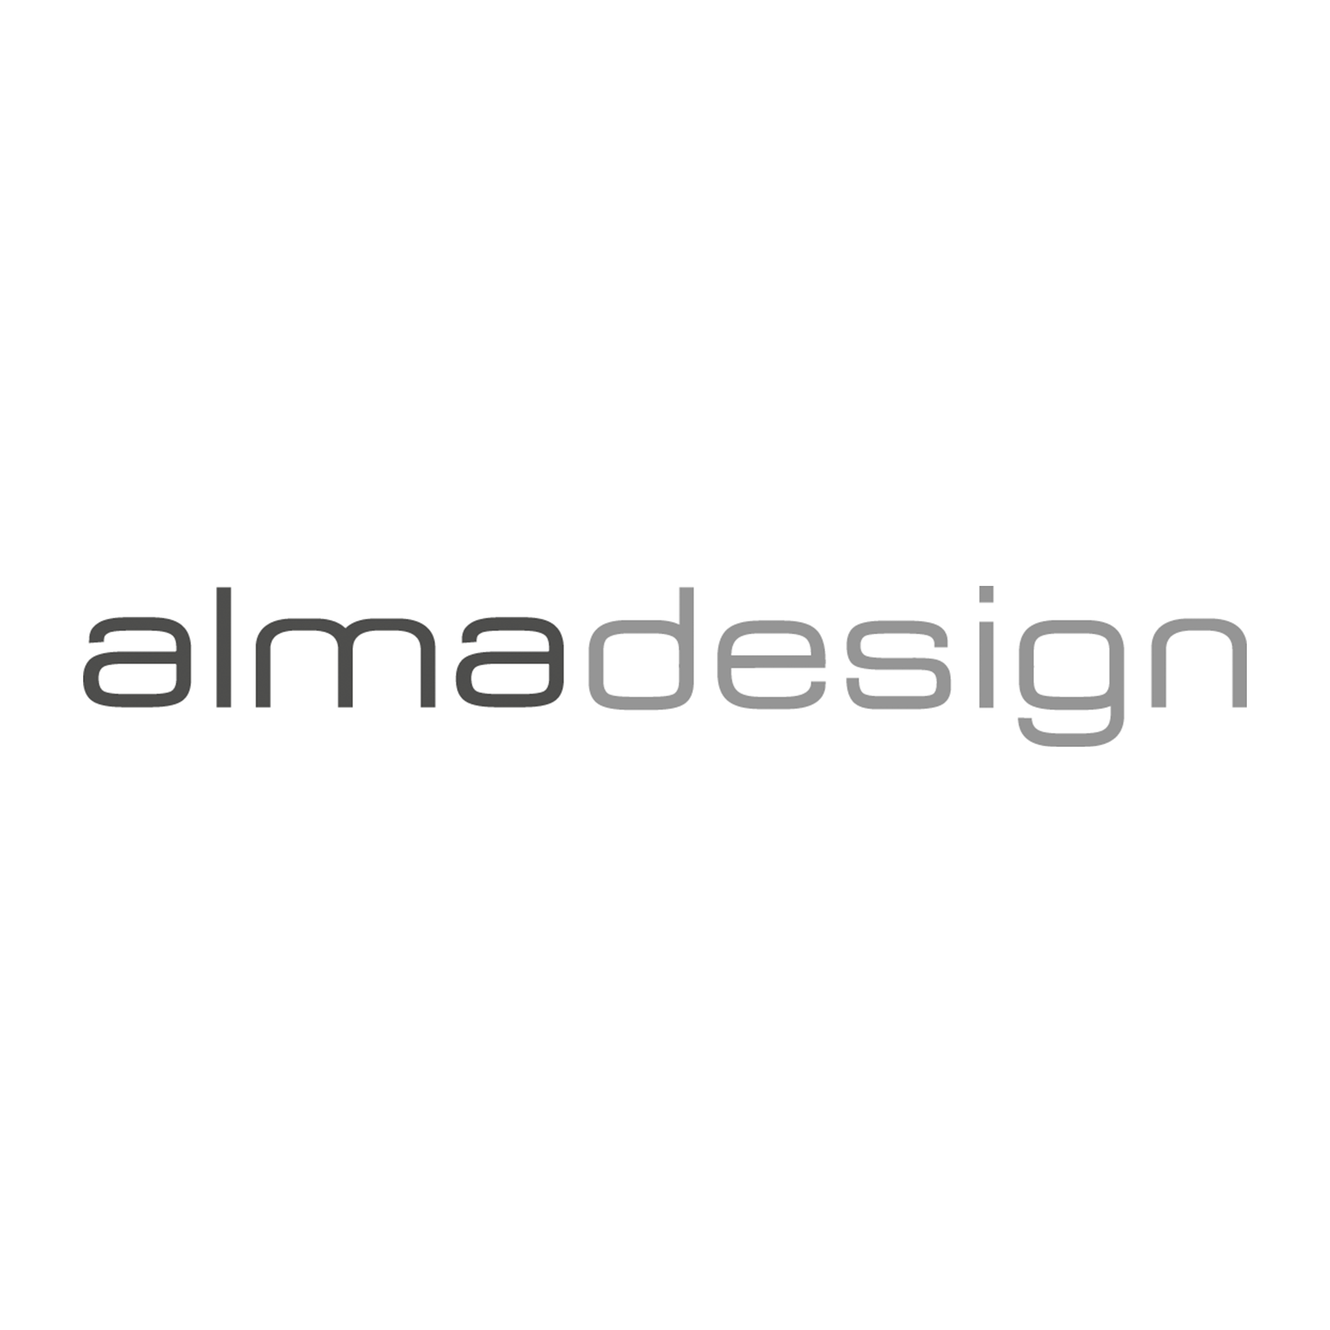 www.almadesign.pt